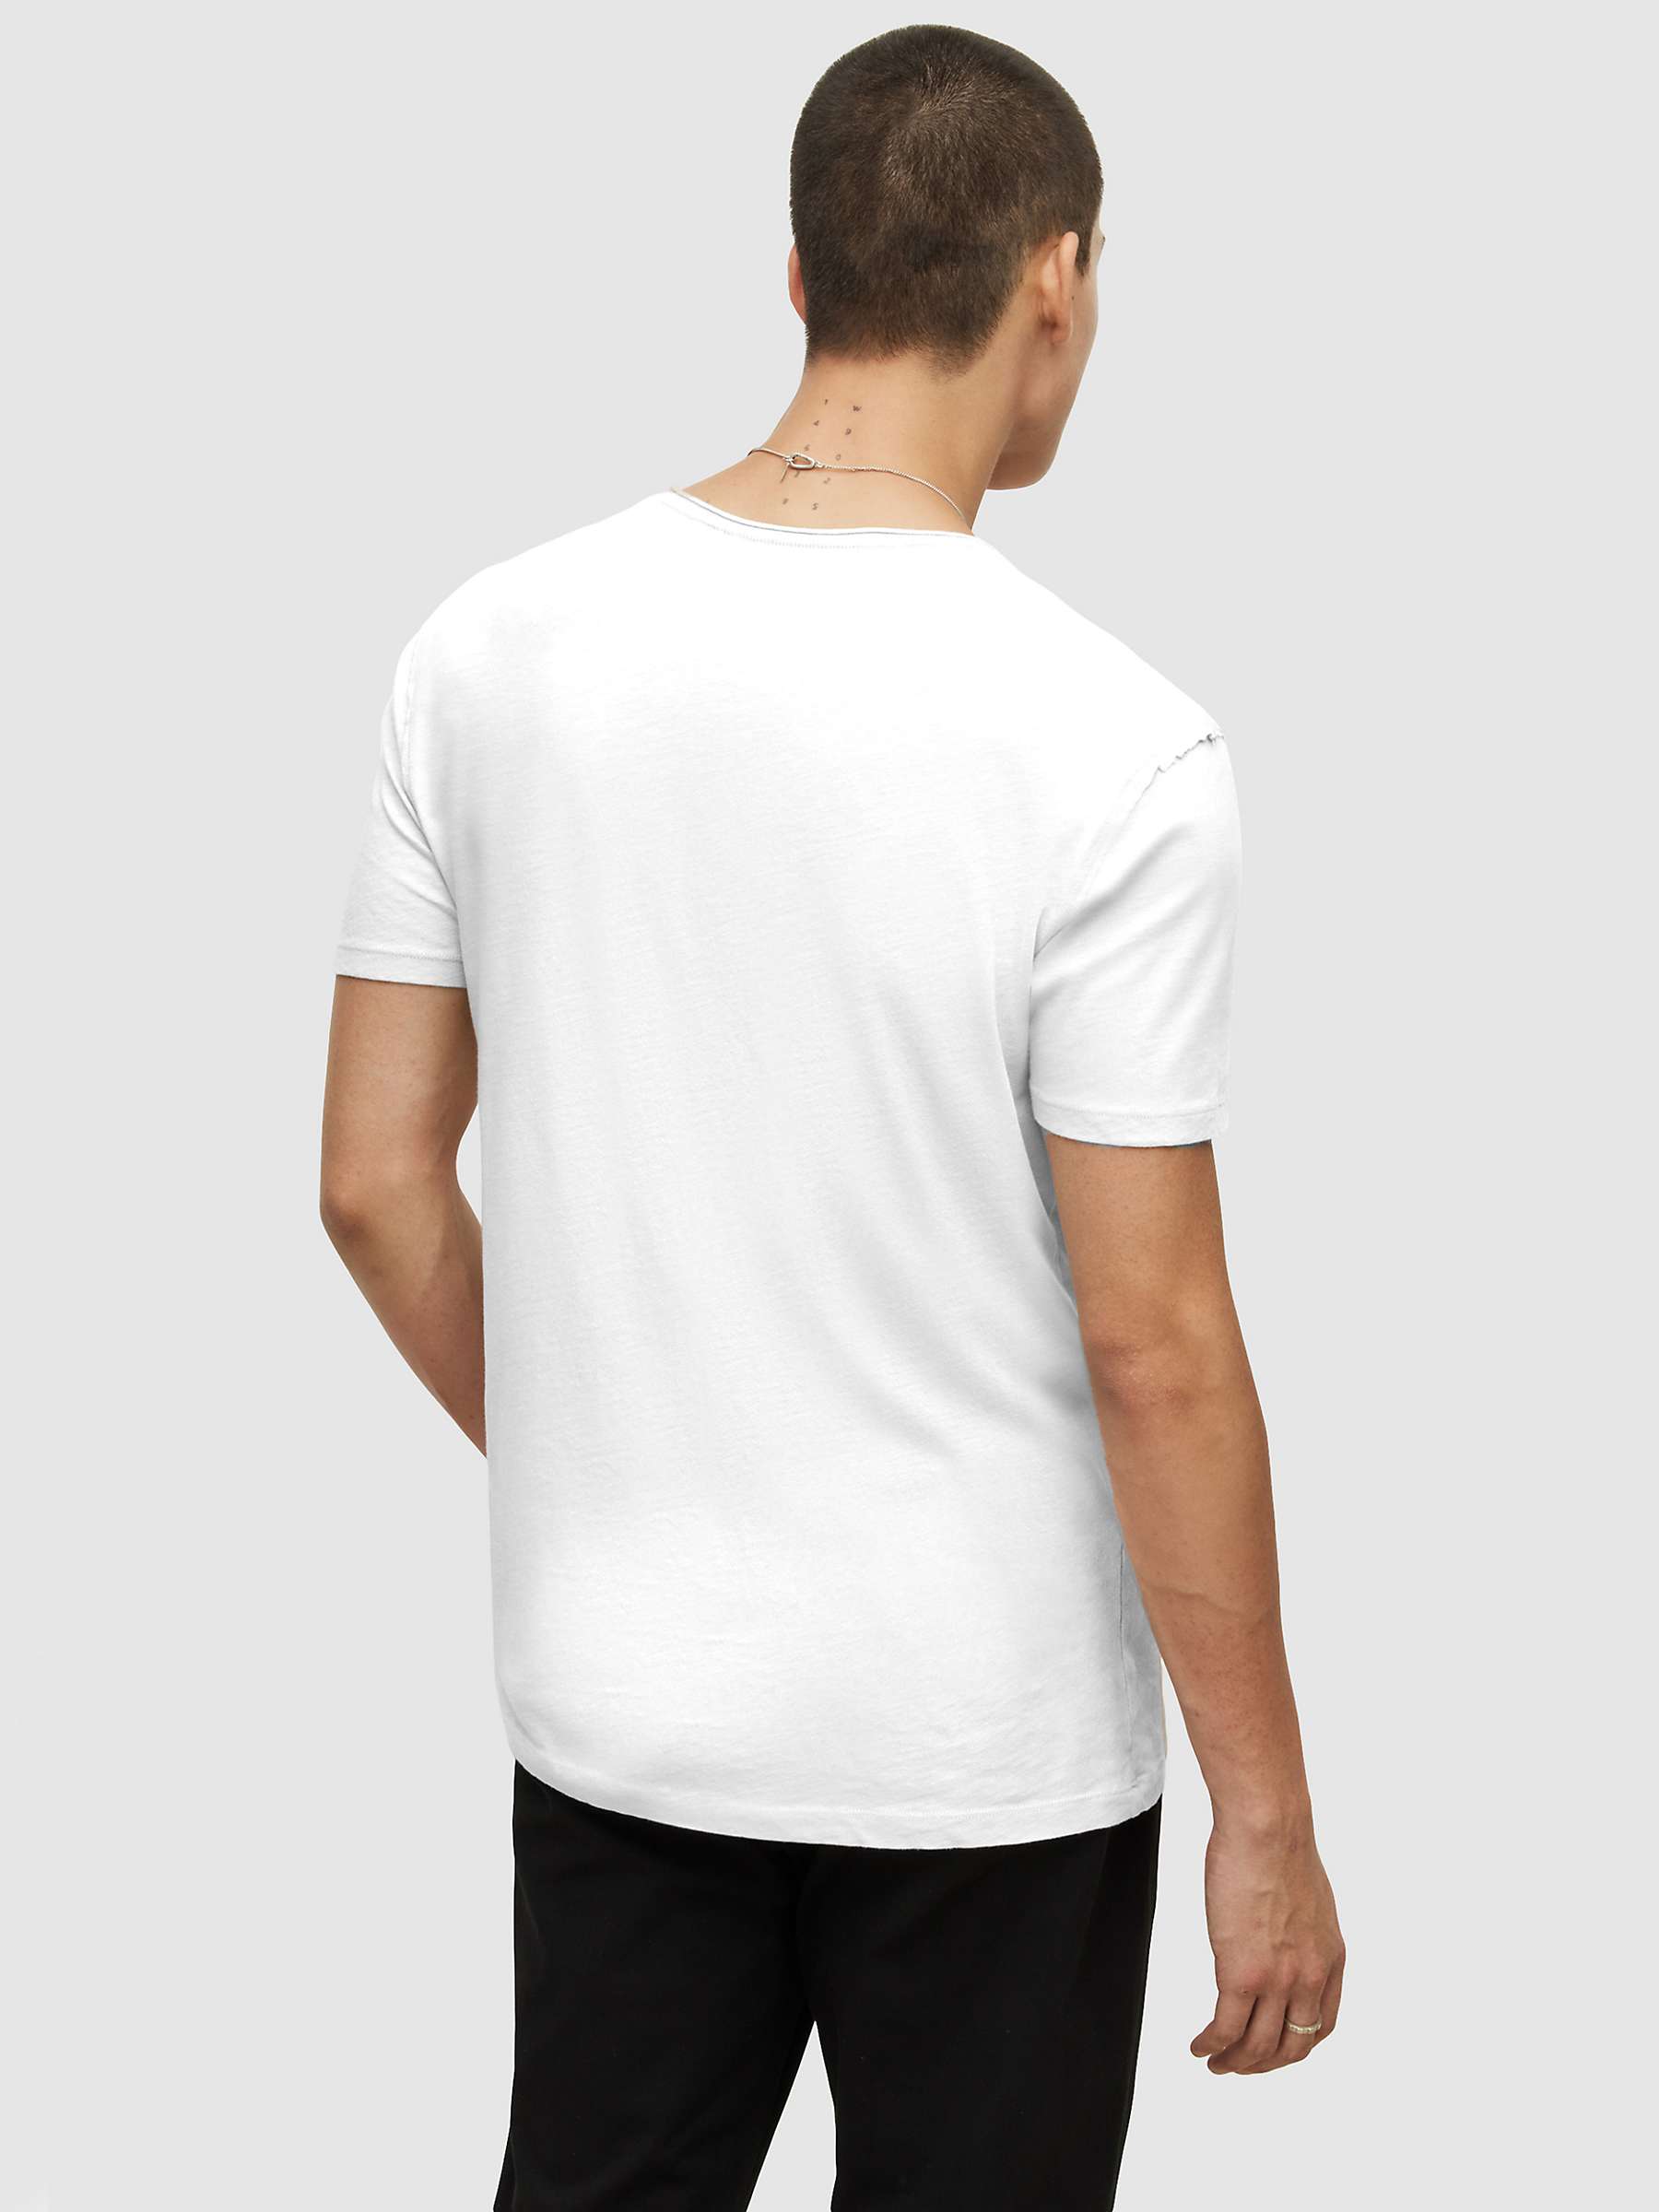 Buy AllSaints Figure Short Sleeved T-Shirt, Pack of 2 Online at johnlewis.com